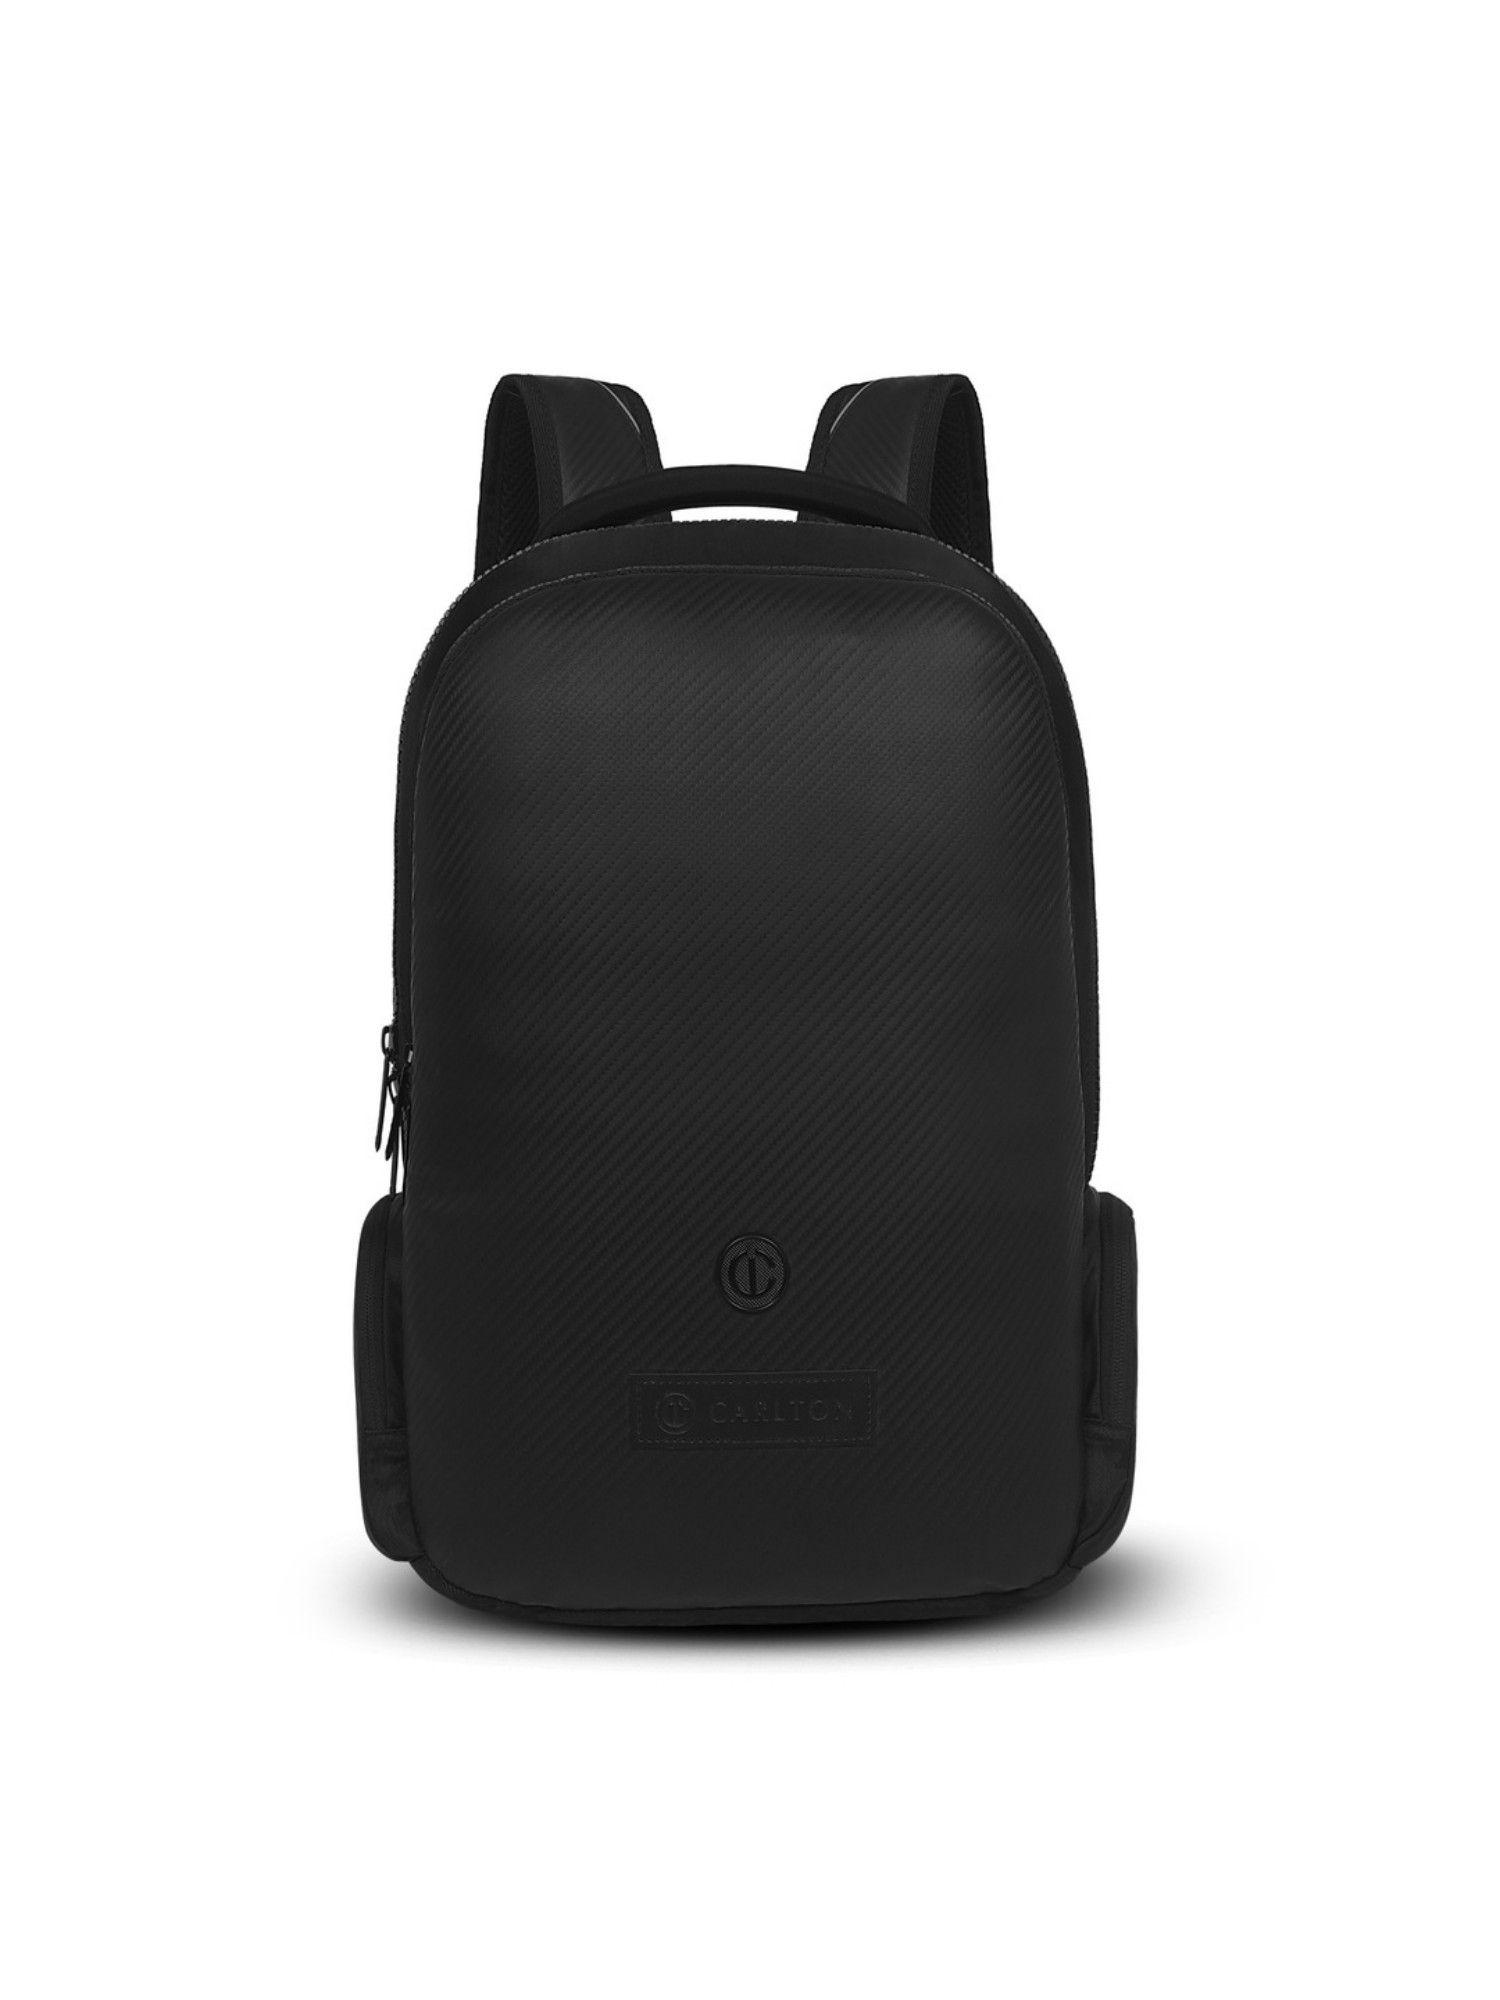 berkeley 02 laptop backpack carbon black